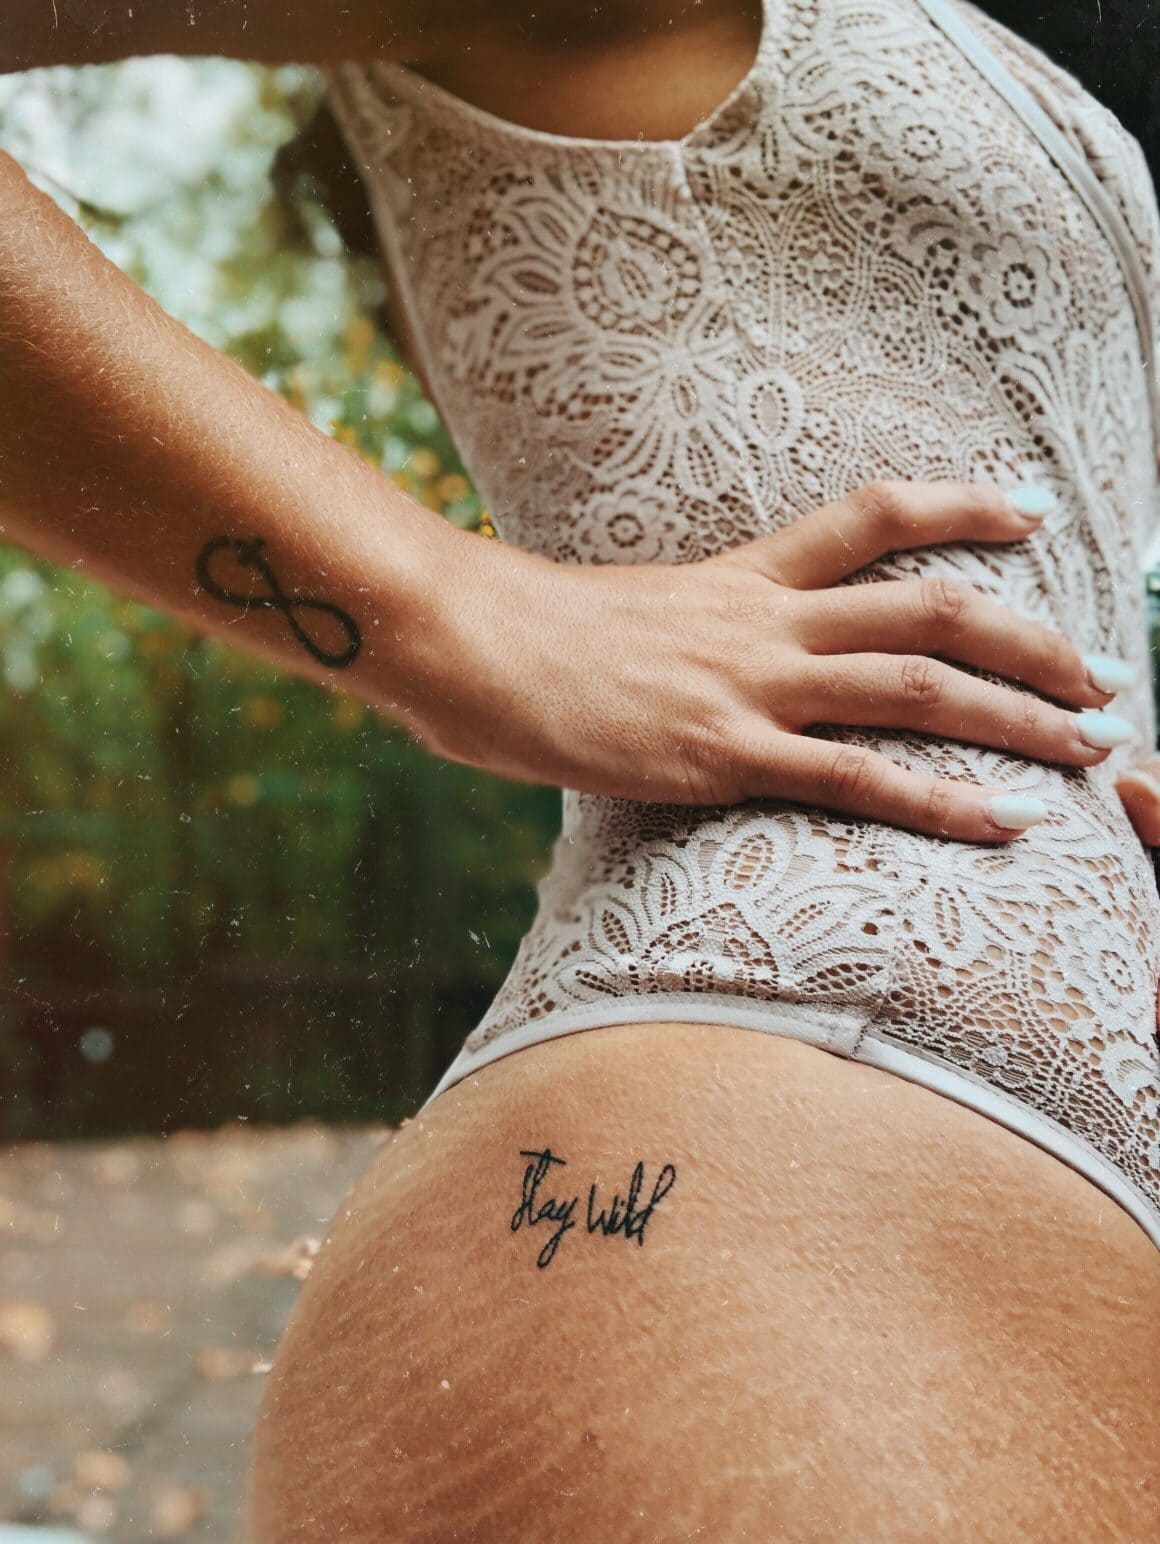 Ideas For Concealing Stretch Marks With Tattoos  Body Art Guru